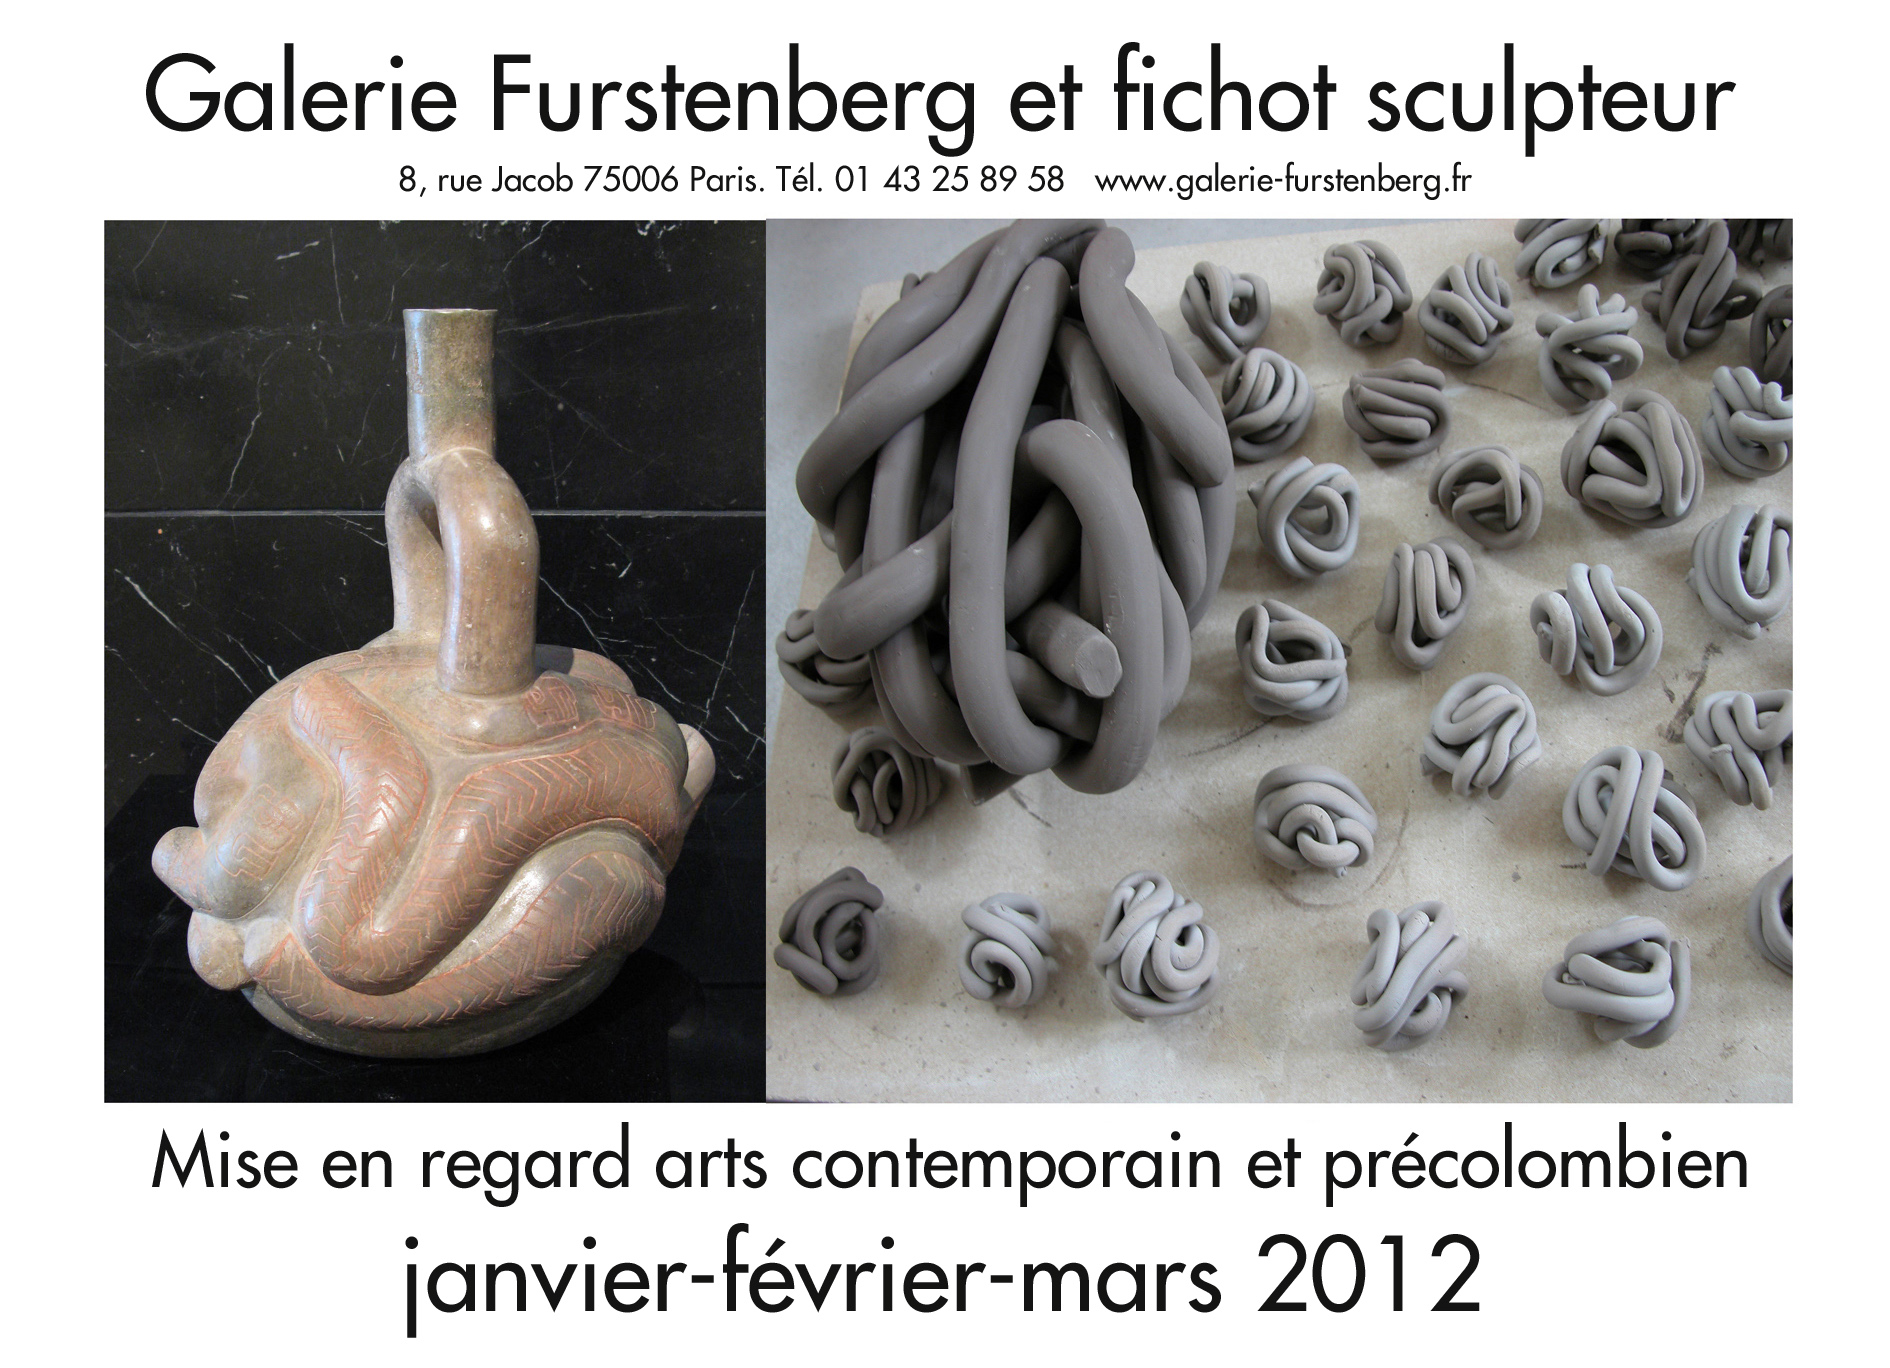 Gallery Furstenberg